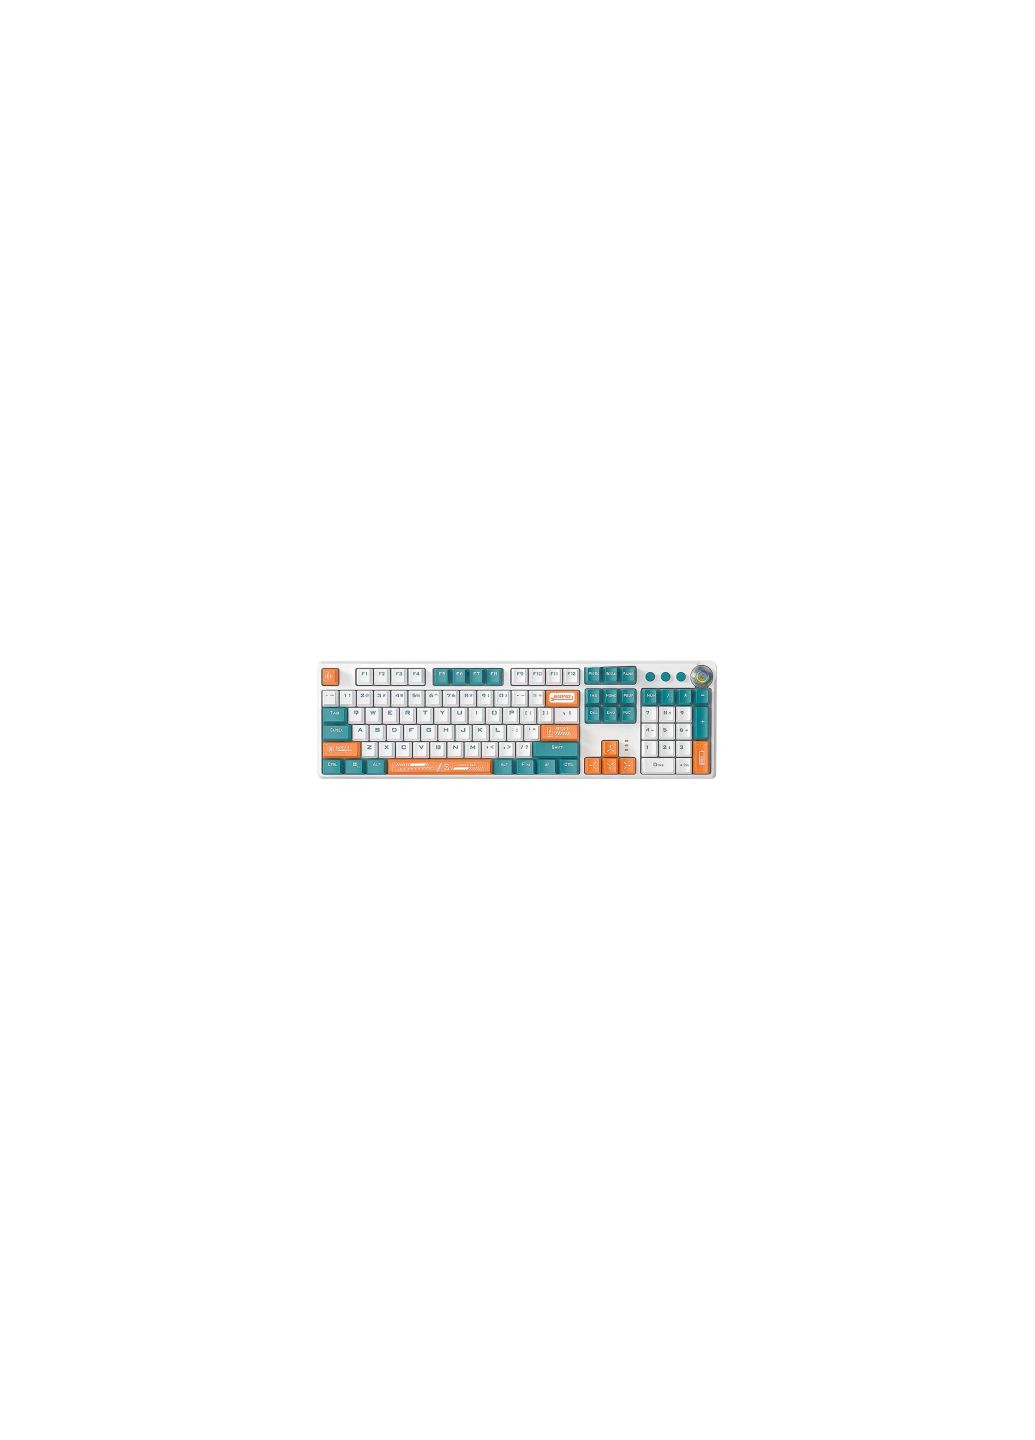 Клавиатура F2088 PRO Plus 9 Orange Keys KRGD Blue USB RU White/Blue (6948391234908) Aula f2088 pro plus 9 orange keys krgd blue usb ua whit (276706462)